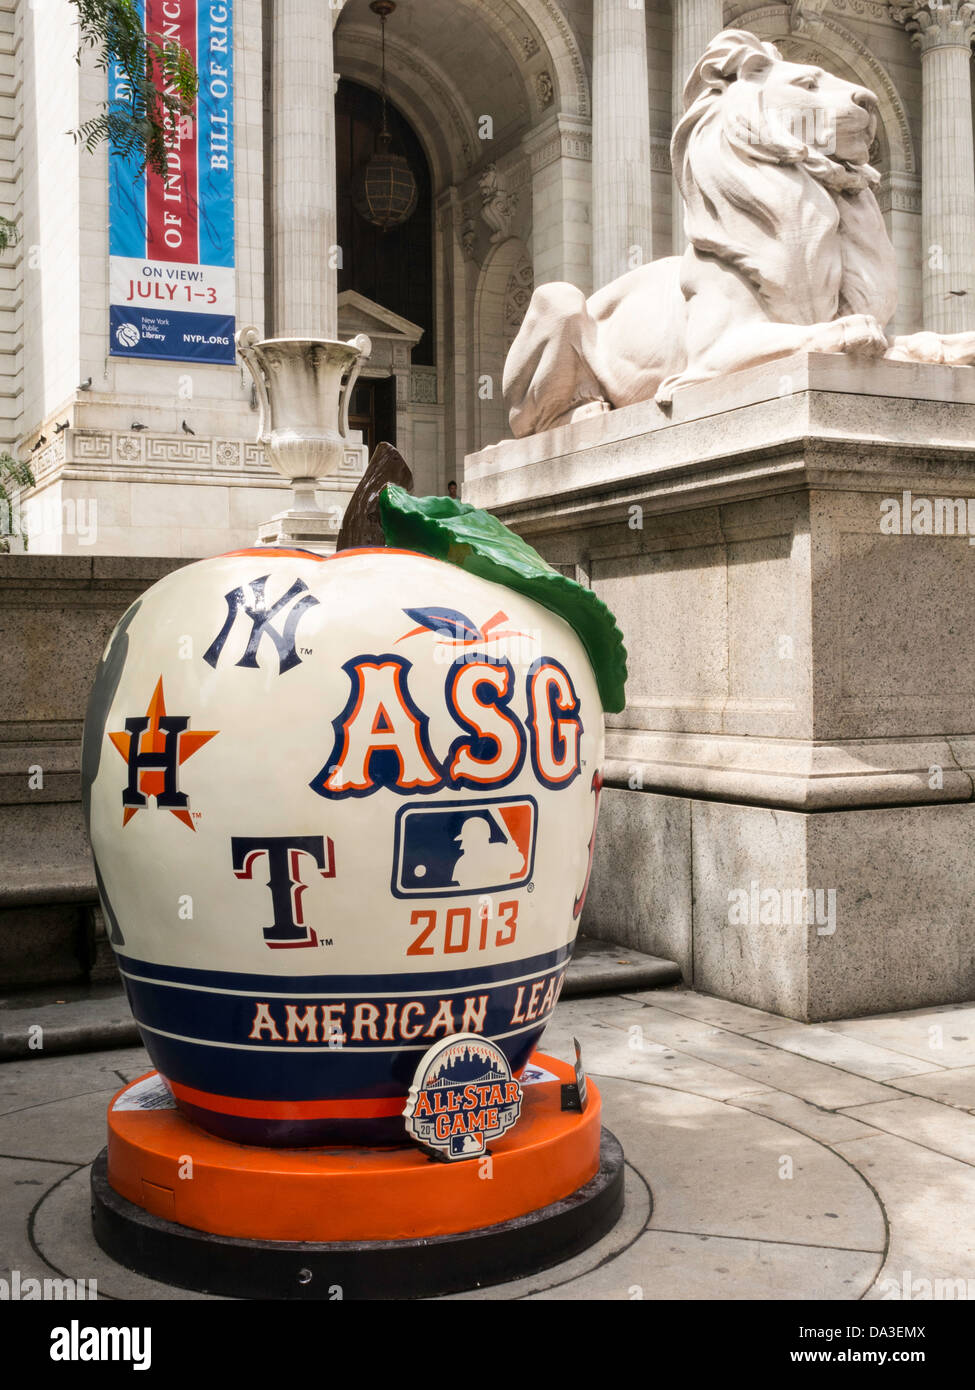 American League Apple, 2013 All-Star Game mele su Parade, NYPL, NYC, STATI UNITI D'AMERICA Foto Stock